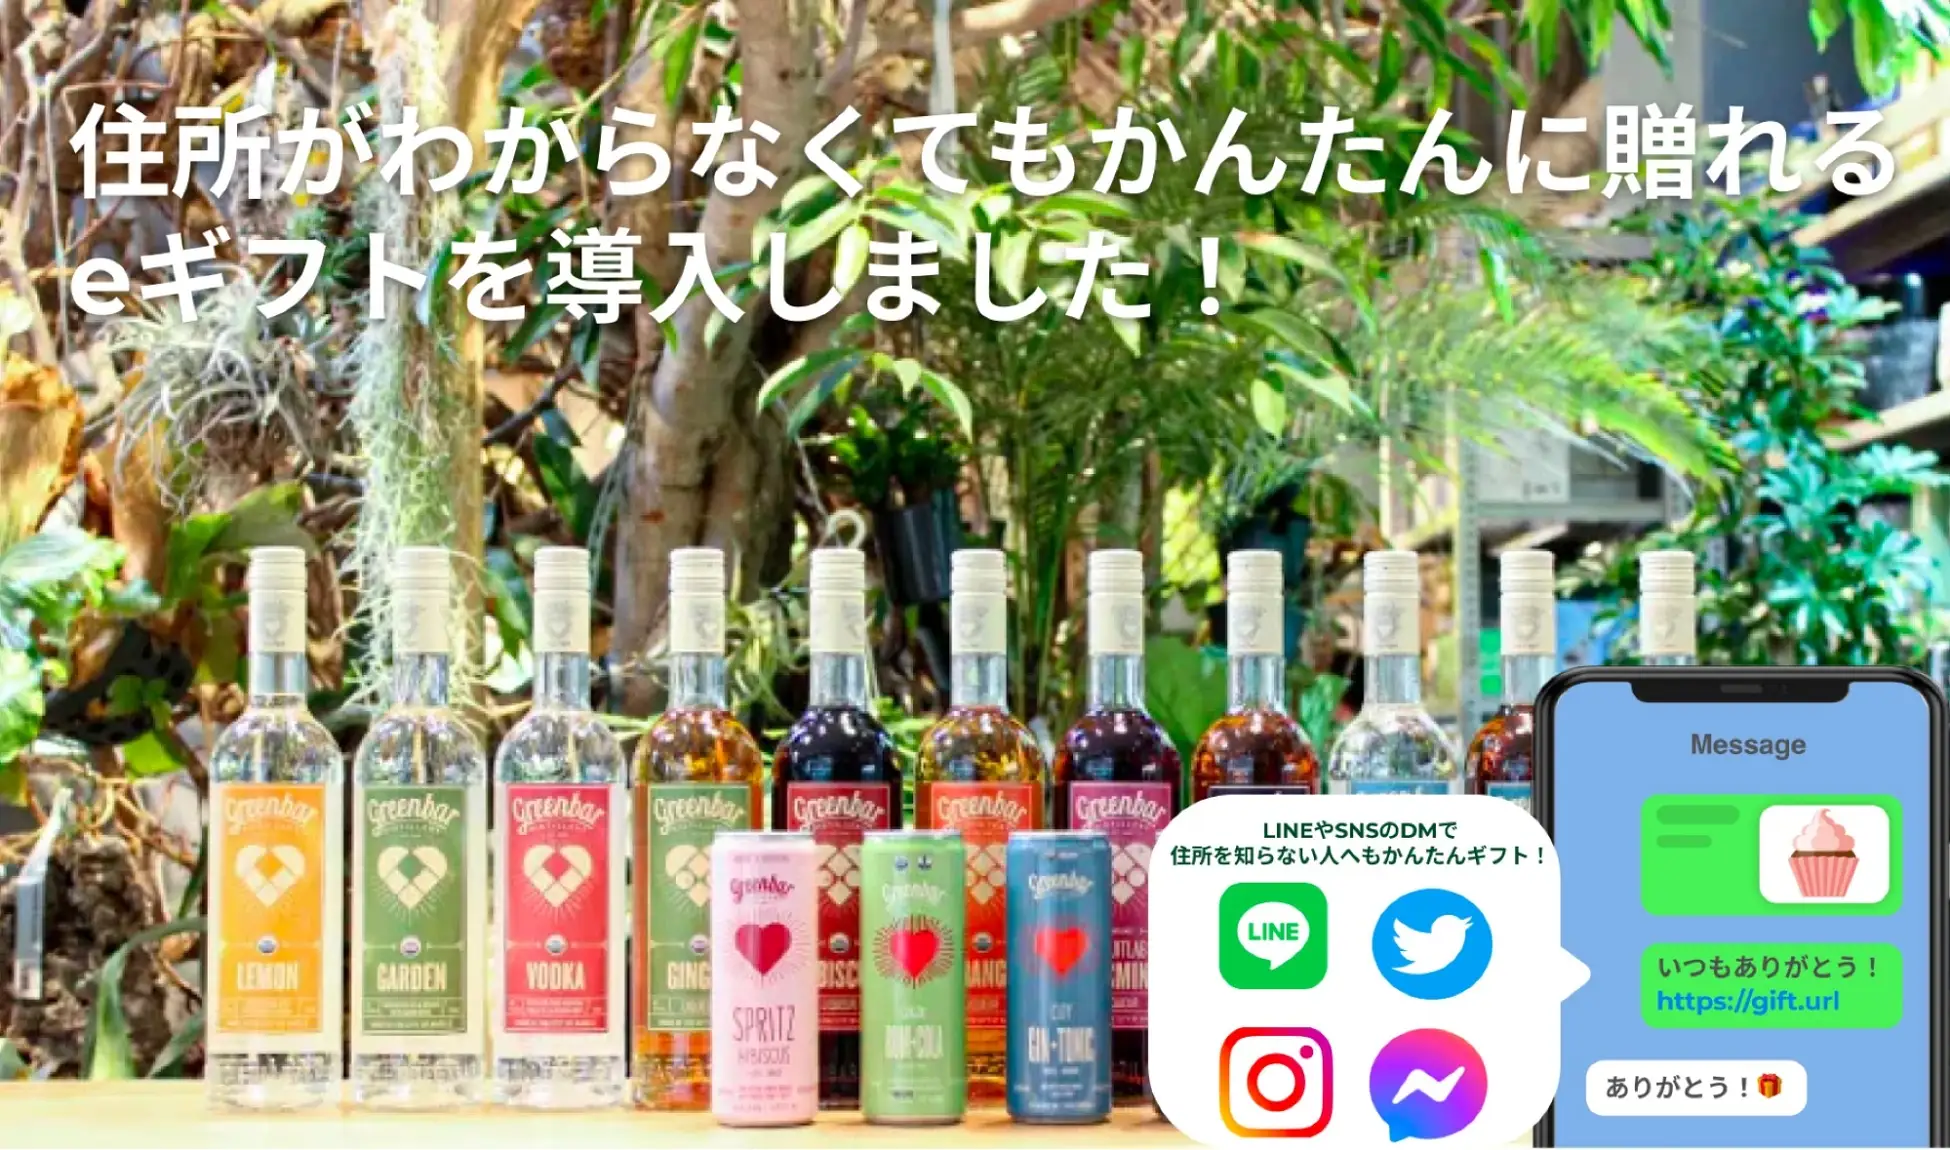 Shopifyアプリ「Allingift」が、飲めば飲むほど緑が増える「緑と共生するやさしいお酒」がコンセプトの『オーガニック蒸留酒Greenbar』公式オンラインショップにて採用